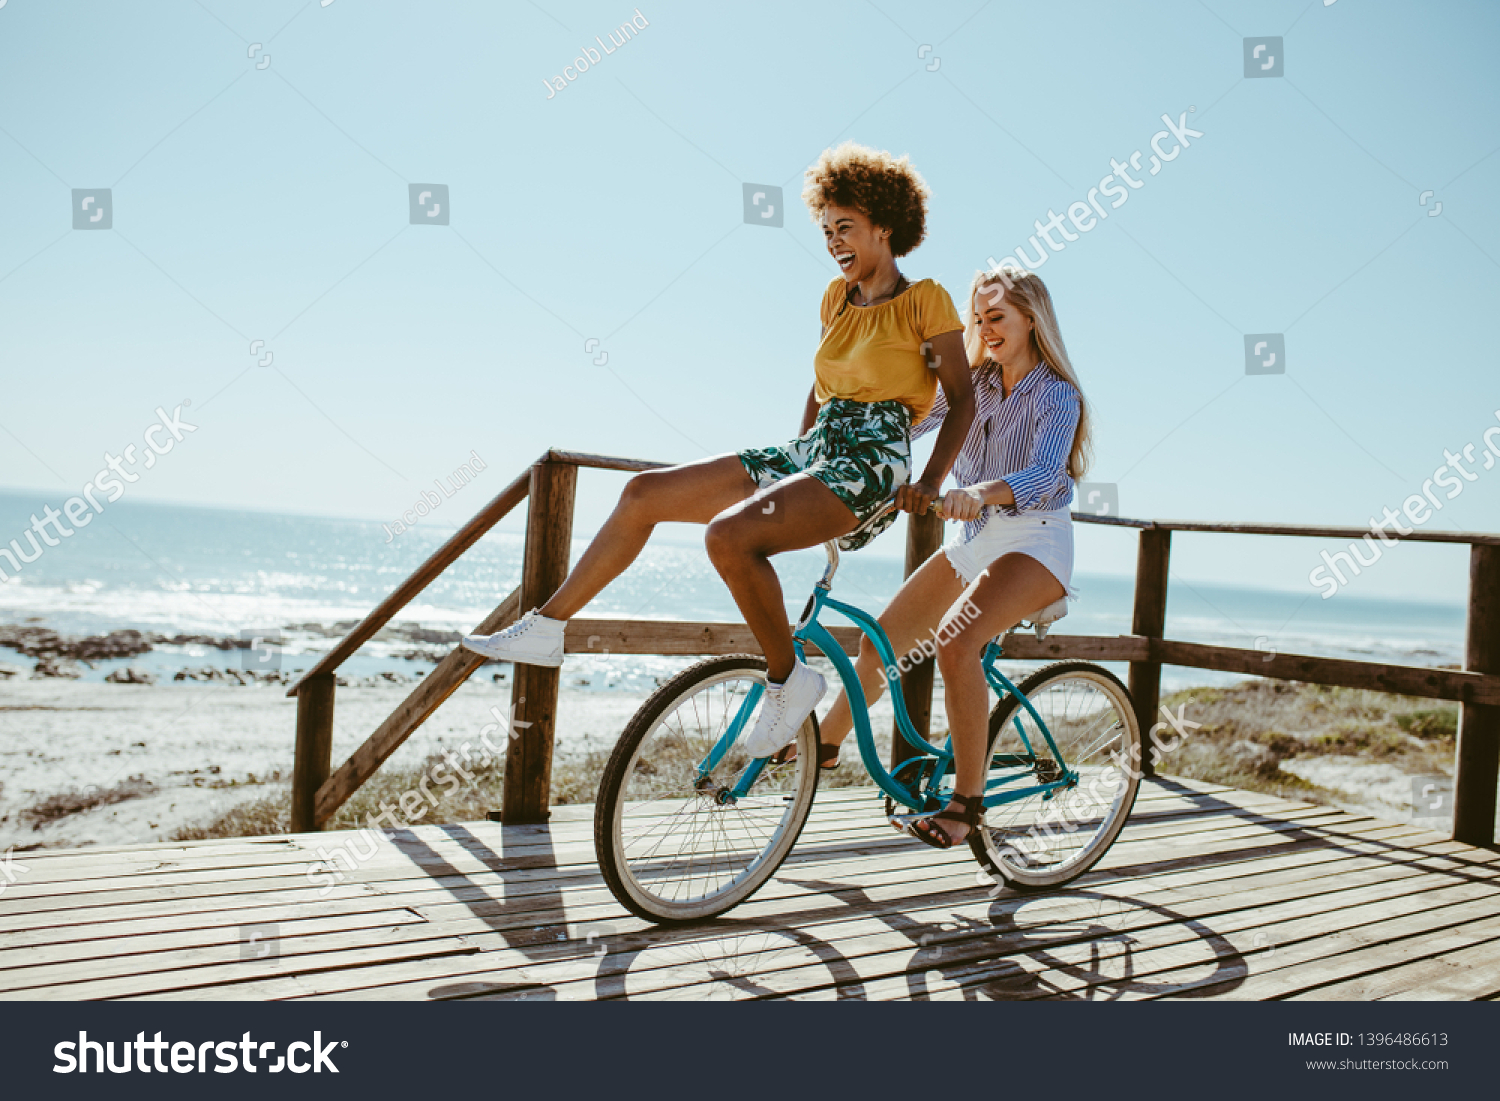 riding on the handlebars of a bike